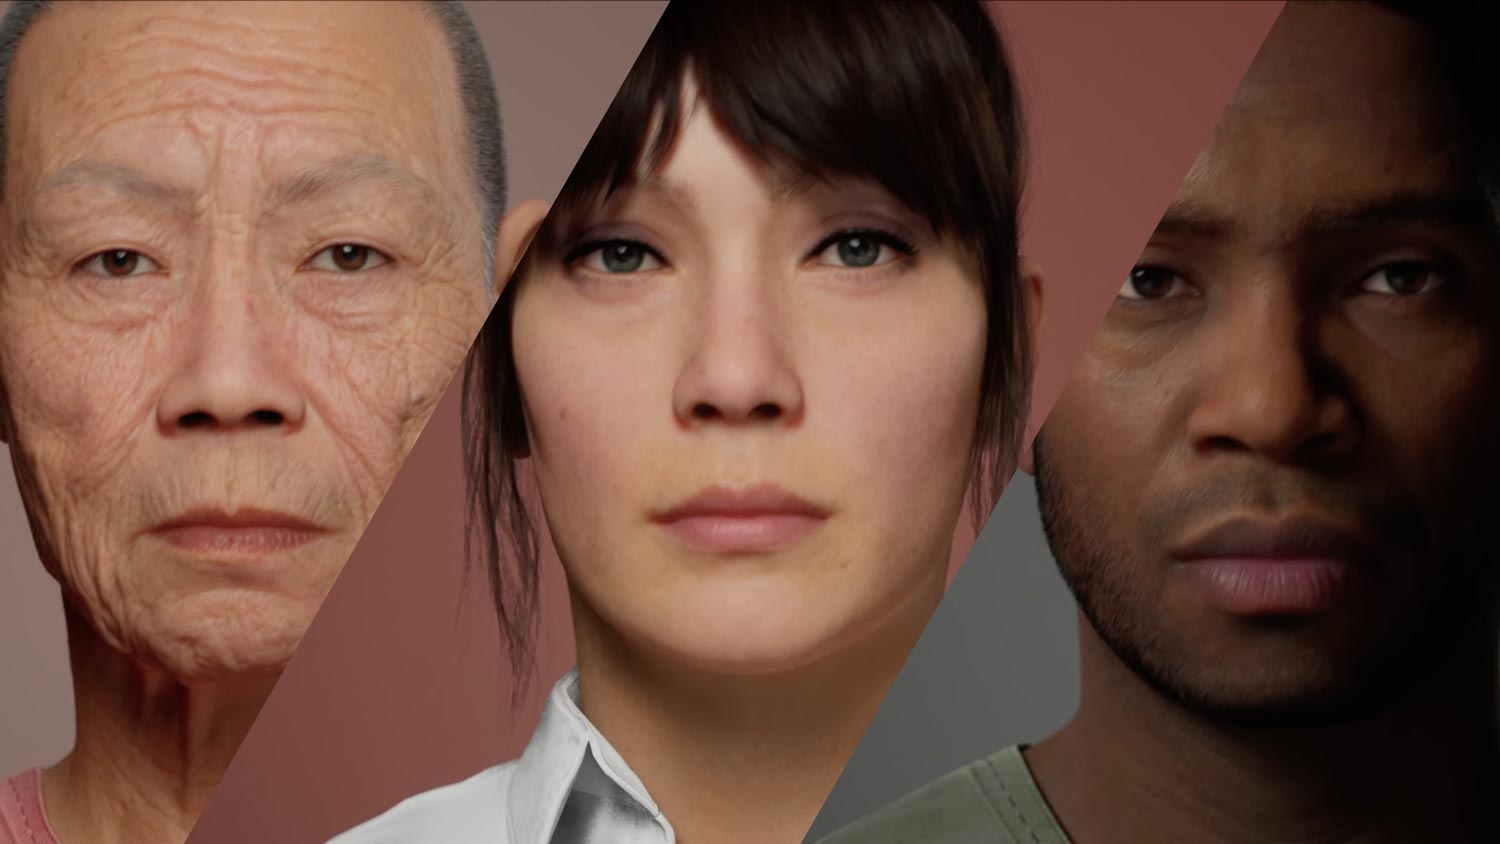 MetaHuman Creator Untuk Unreal Engine Menghasilkan Watak Manusia 3D Yang Kelihatan Hidup